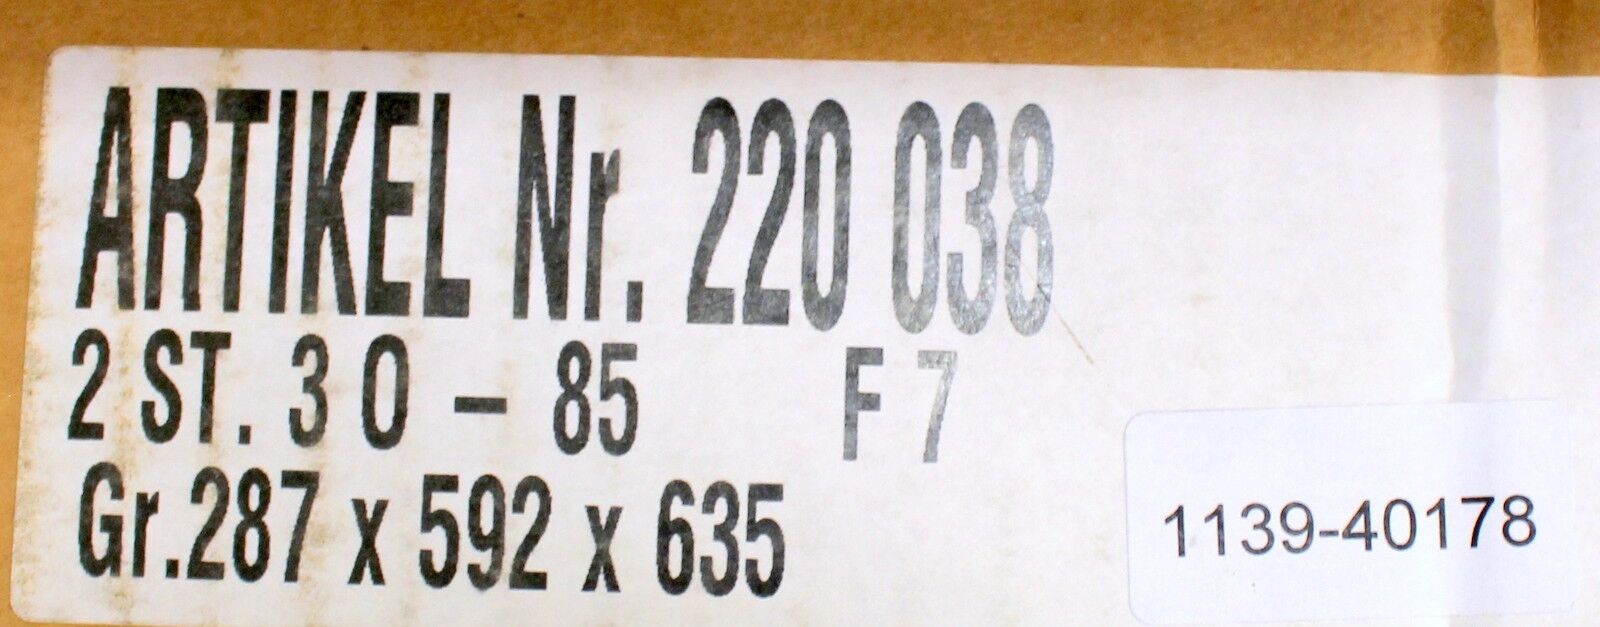 CAMFIL Taschenfilter 287x592x635 – Typ 3 O – 85 F7 - Art.Nr. 220038